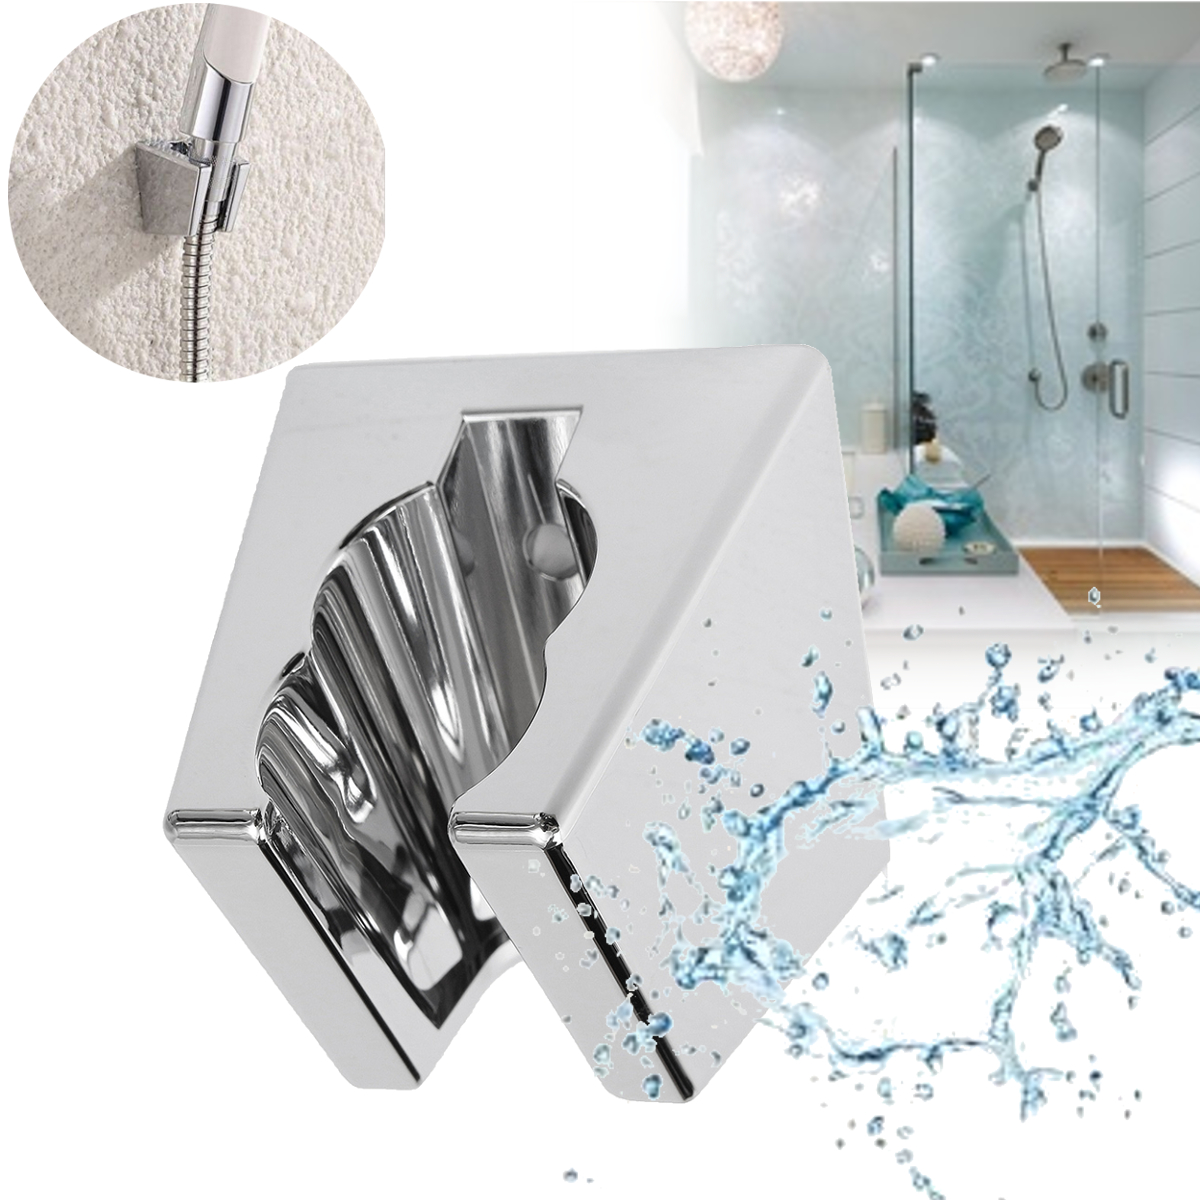 Universal-Bathroom-Wall-Mount-Shower-Bracket-Holder-for-Handheld-Shower-Head-1577589